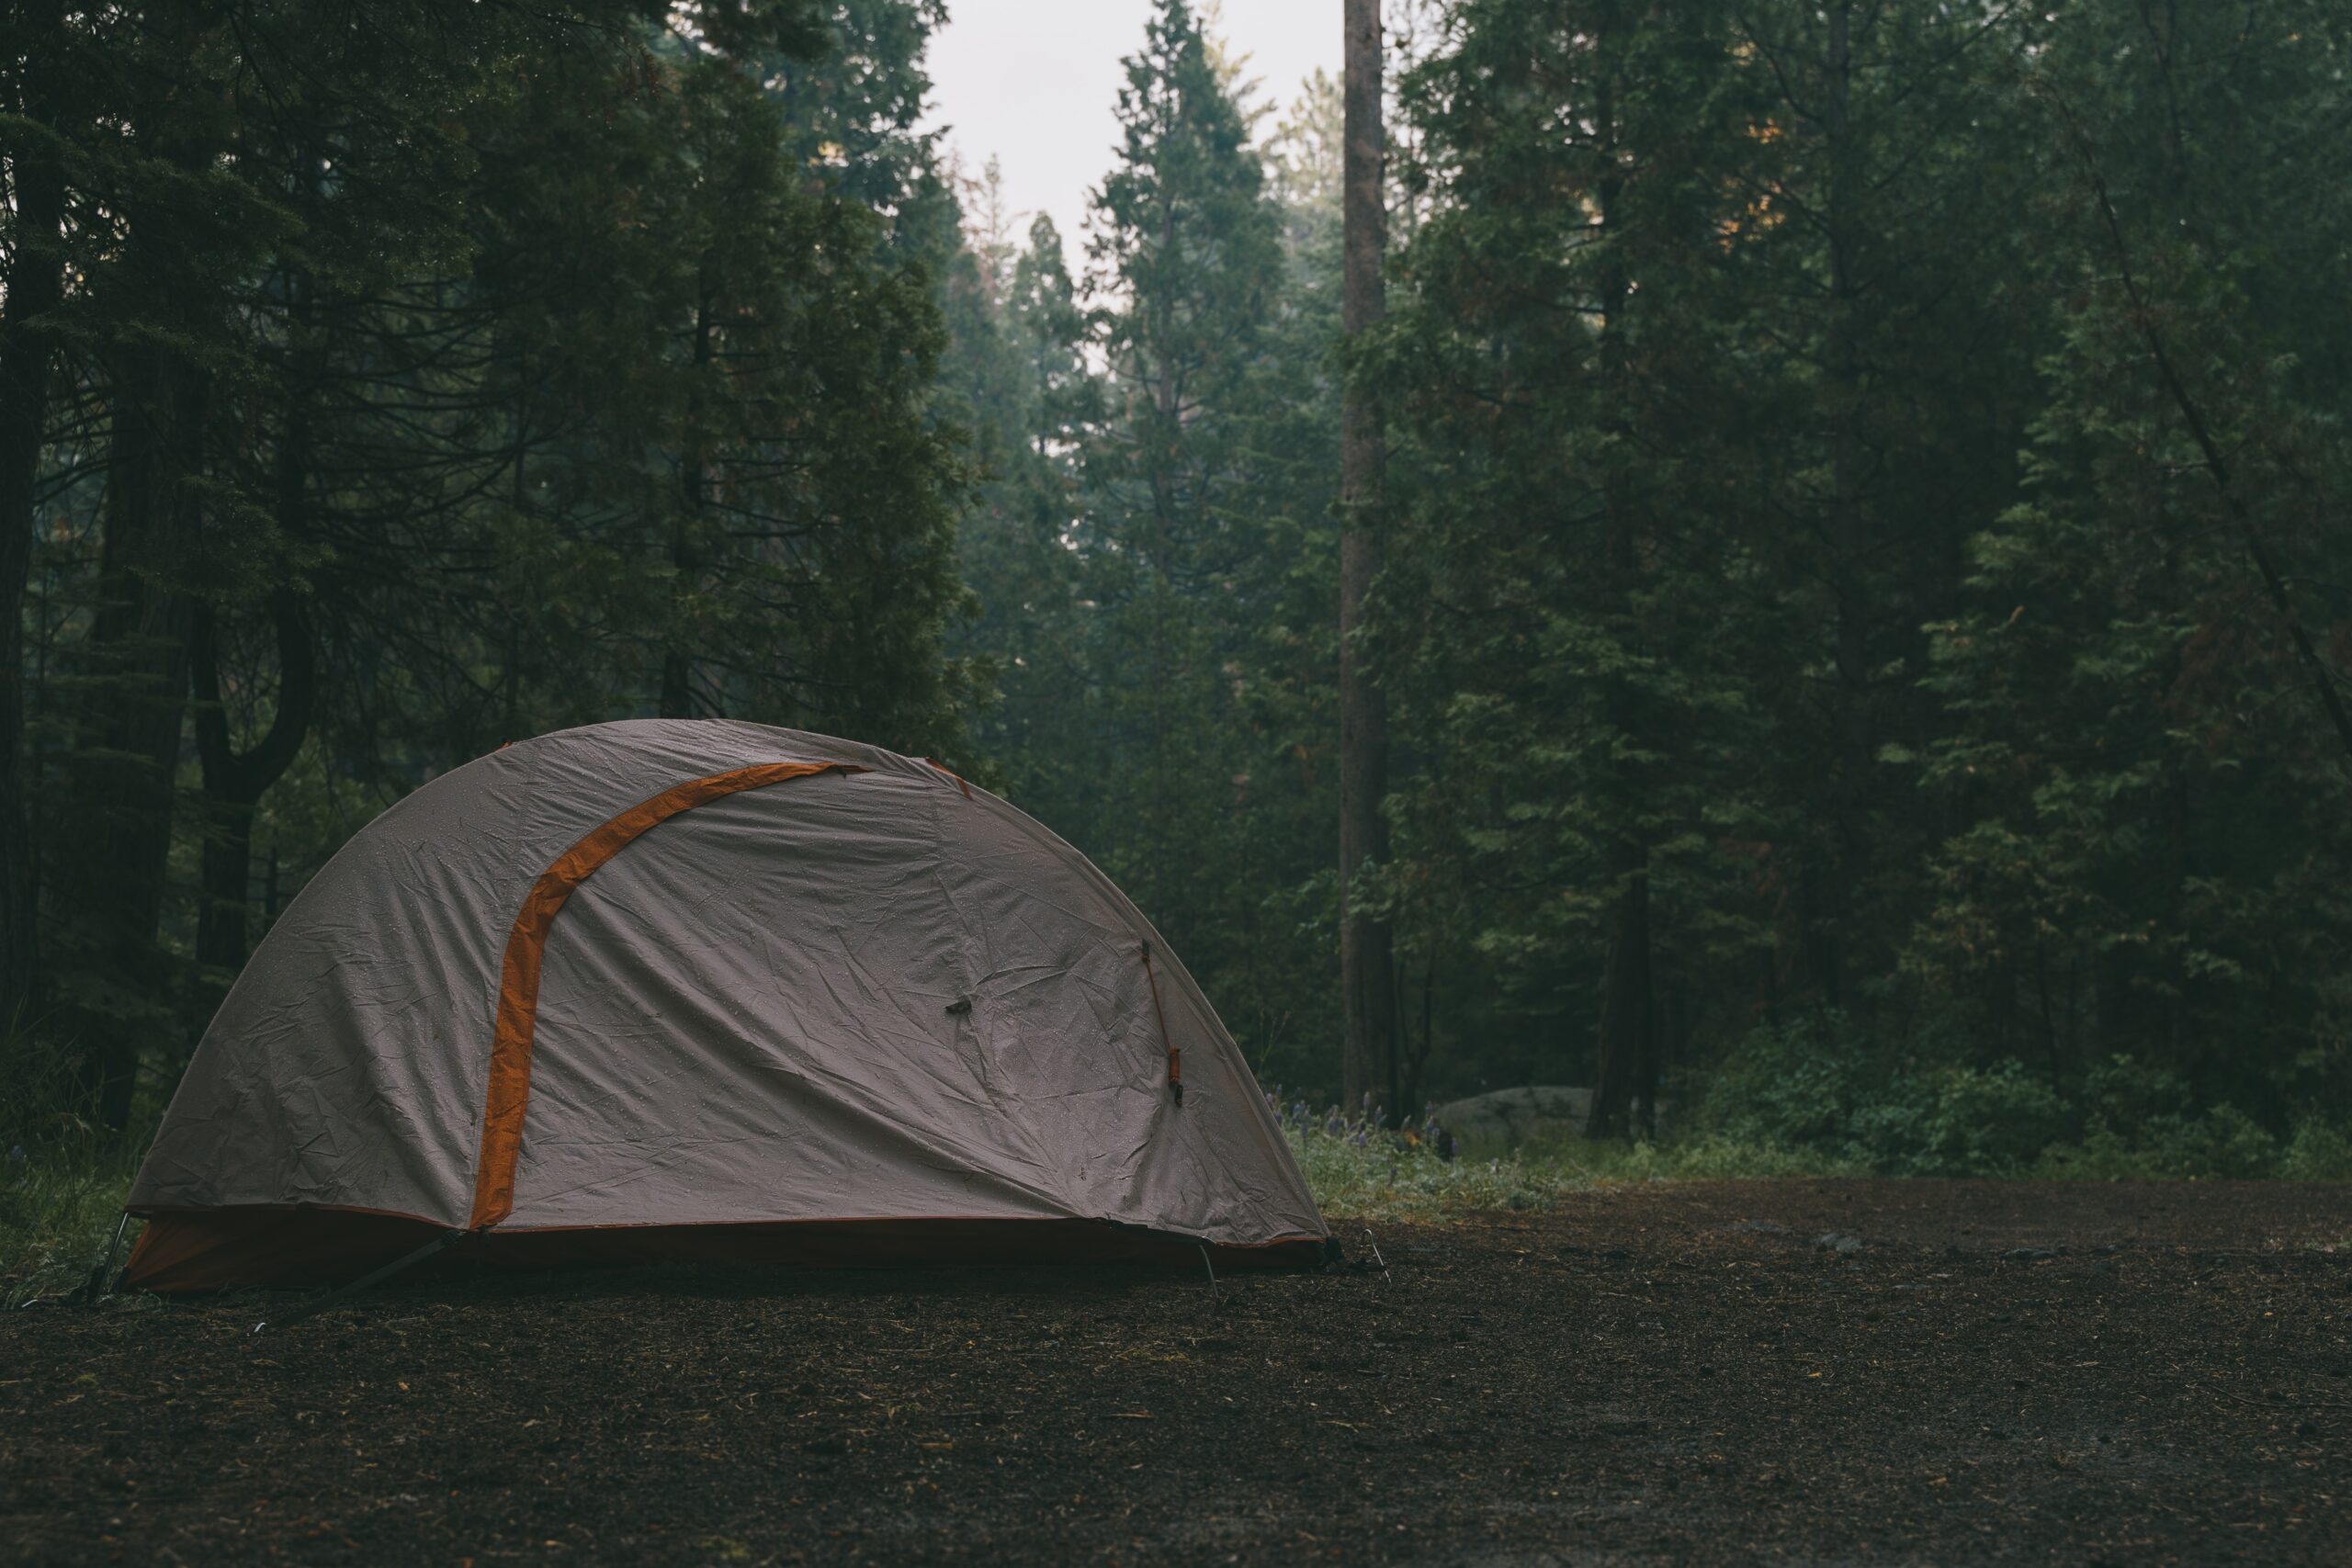 Best waterproof tents for camping in rain